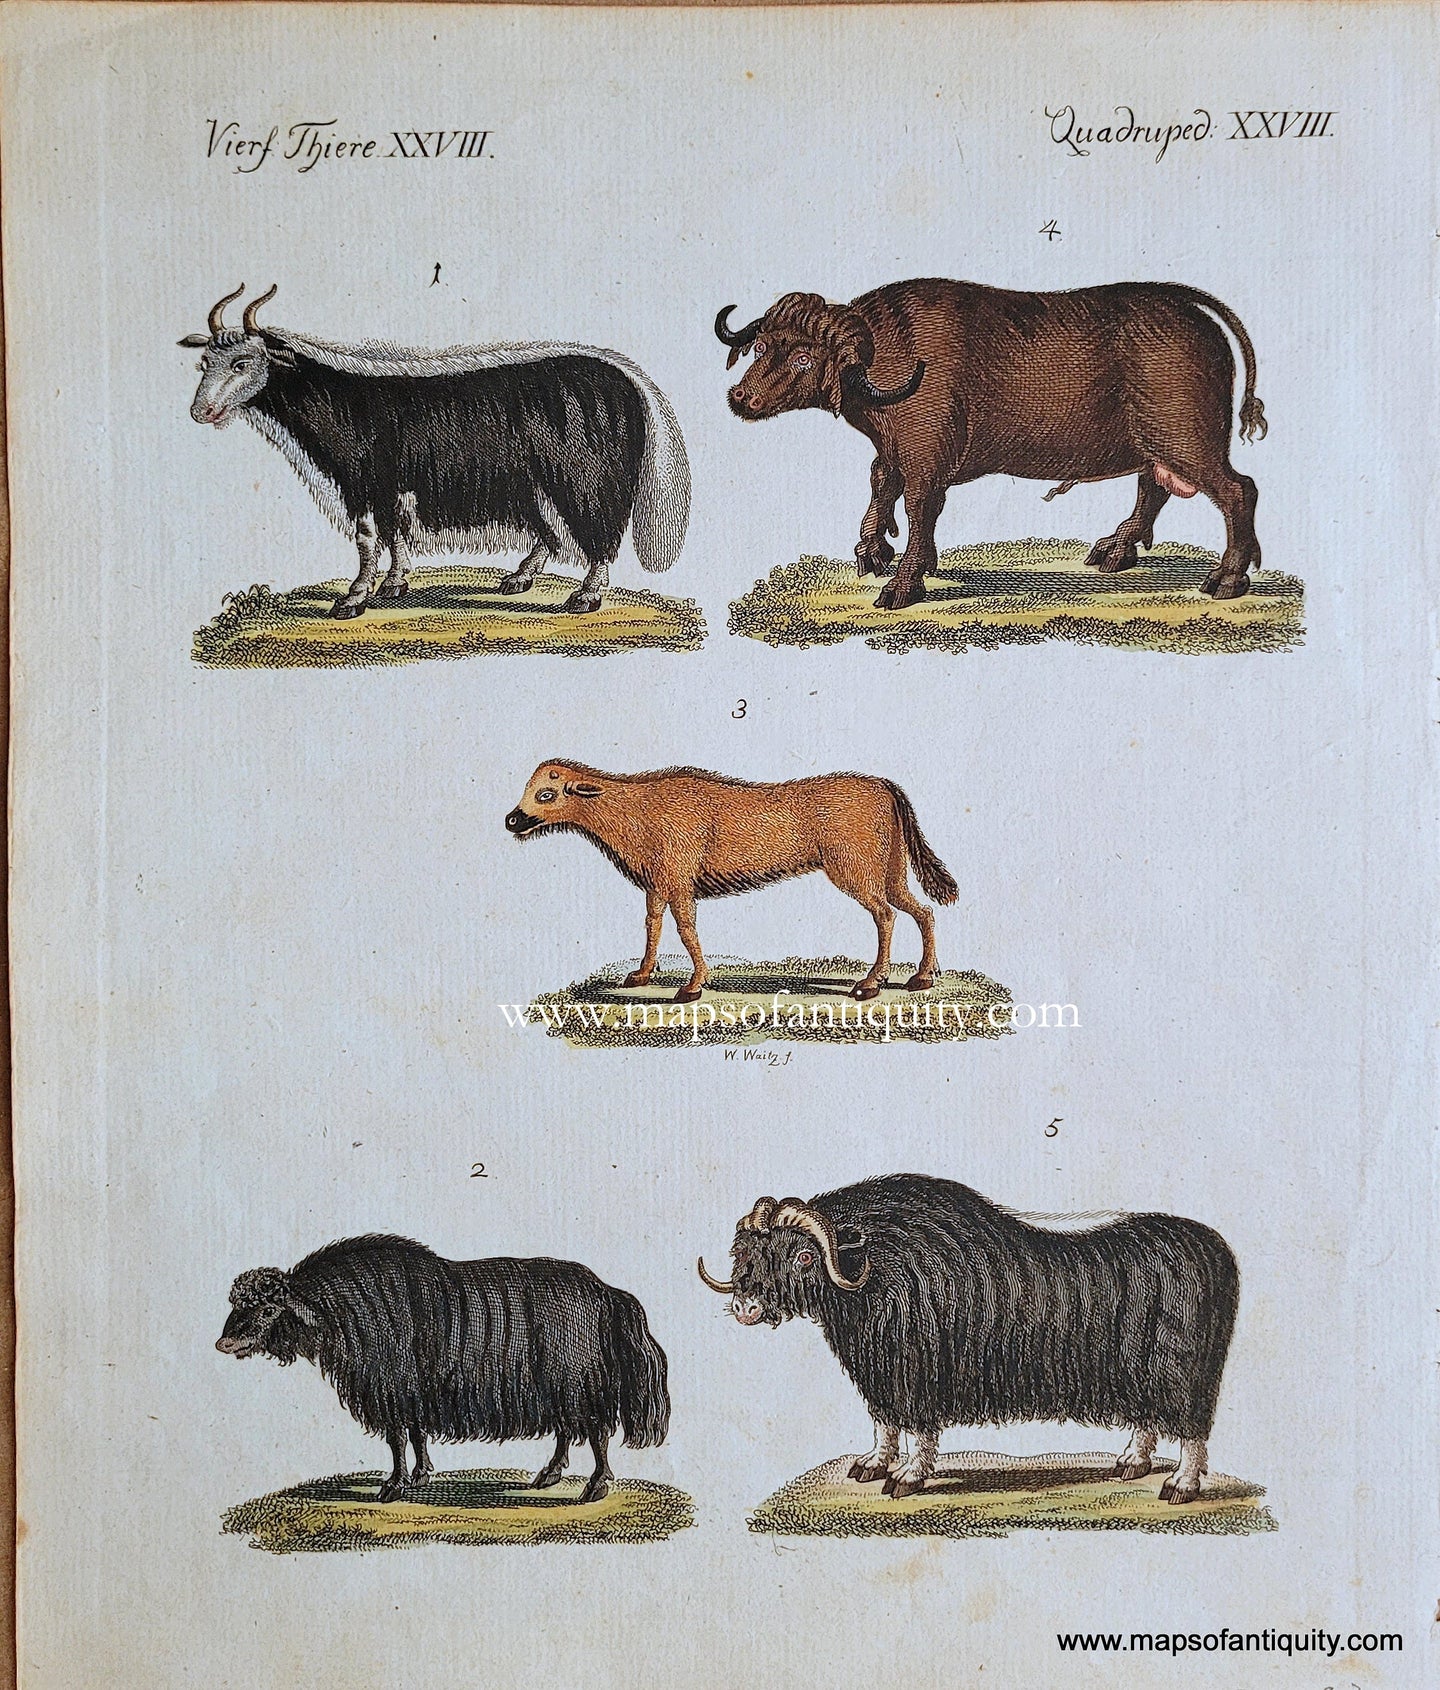 Genuine-Antique-Print-Quadruped-XXVIII-(Buffalo-and-Yaks)-1790-Bertuch-Maps-Of-Antiquity